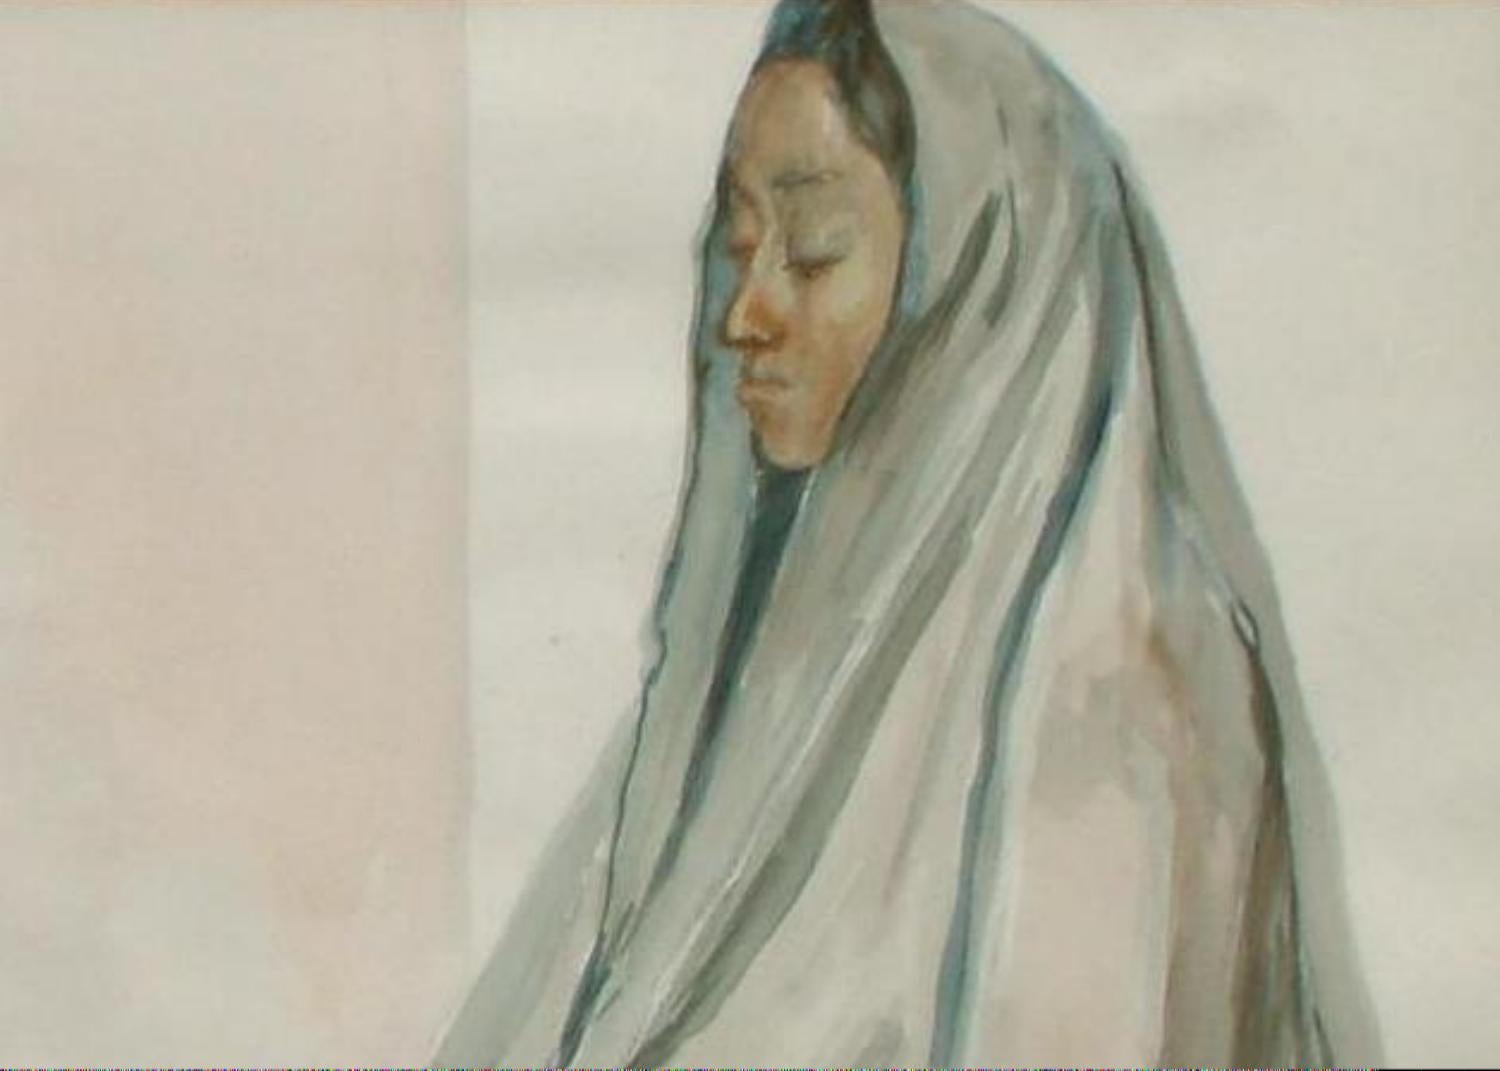 Francisco Zuniga Mexican Modernist Watercolor, 1984, “Mujer Sentada con Rebozo